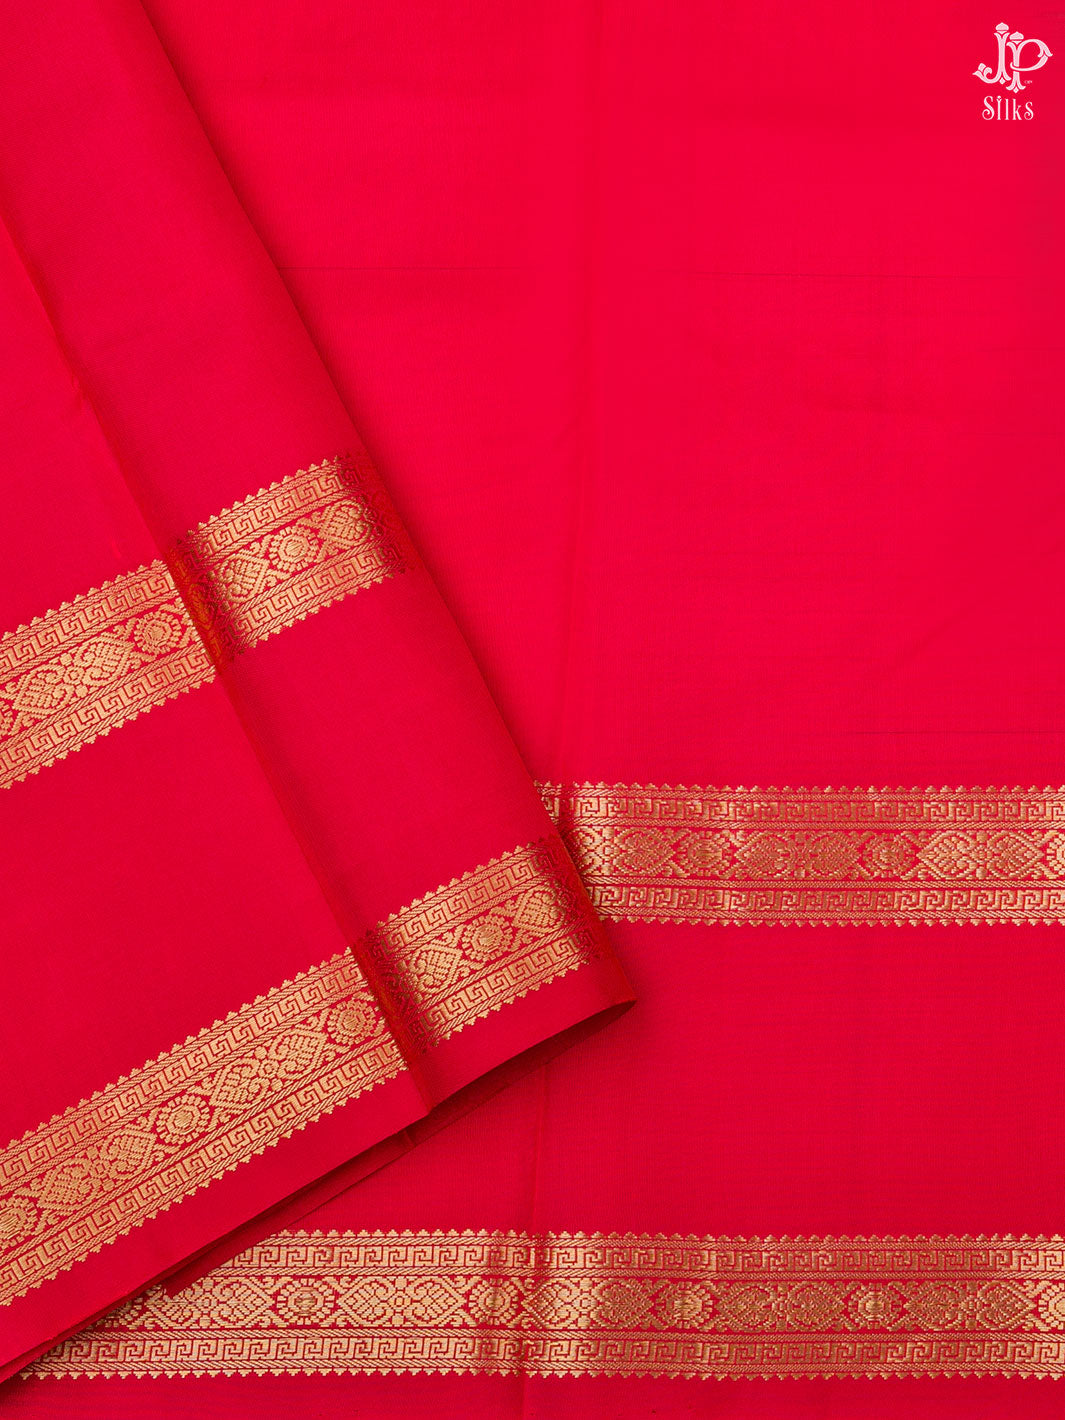 Brick Brown and Red Kanchipuram Silk Saree - D9787 - View 3